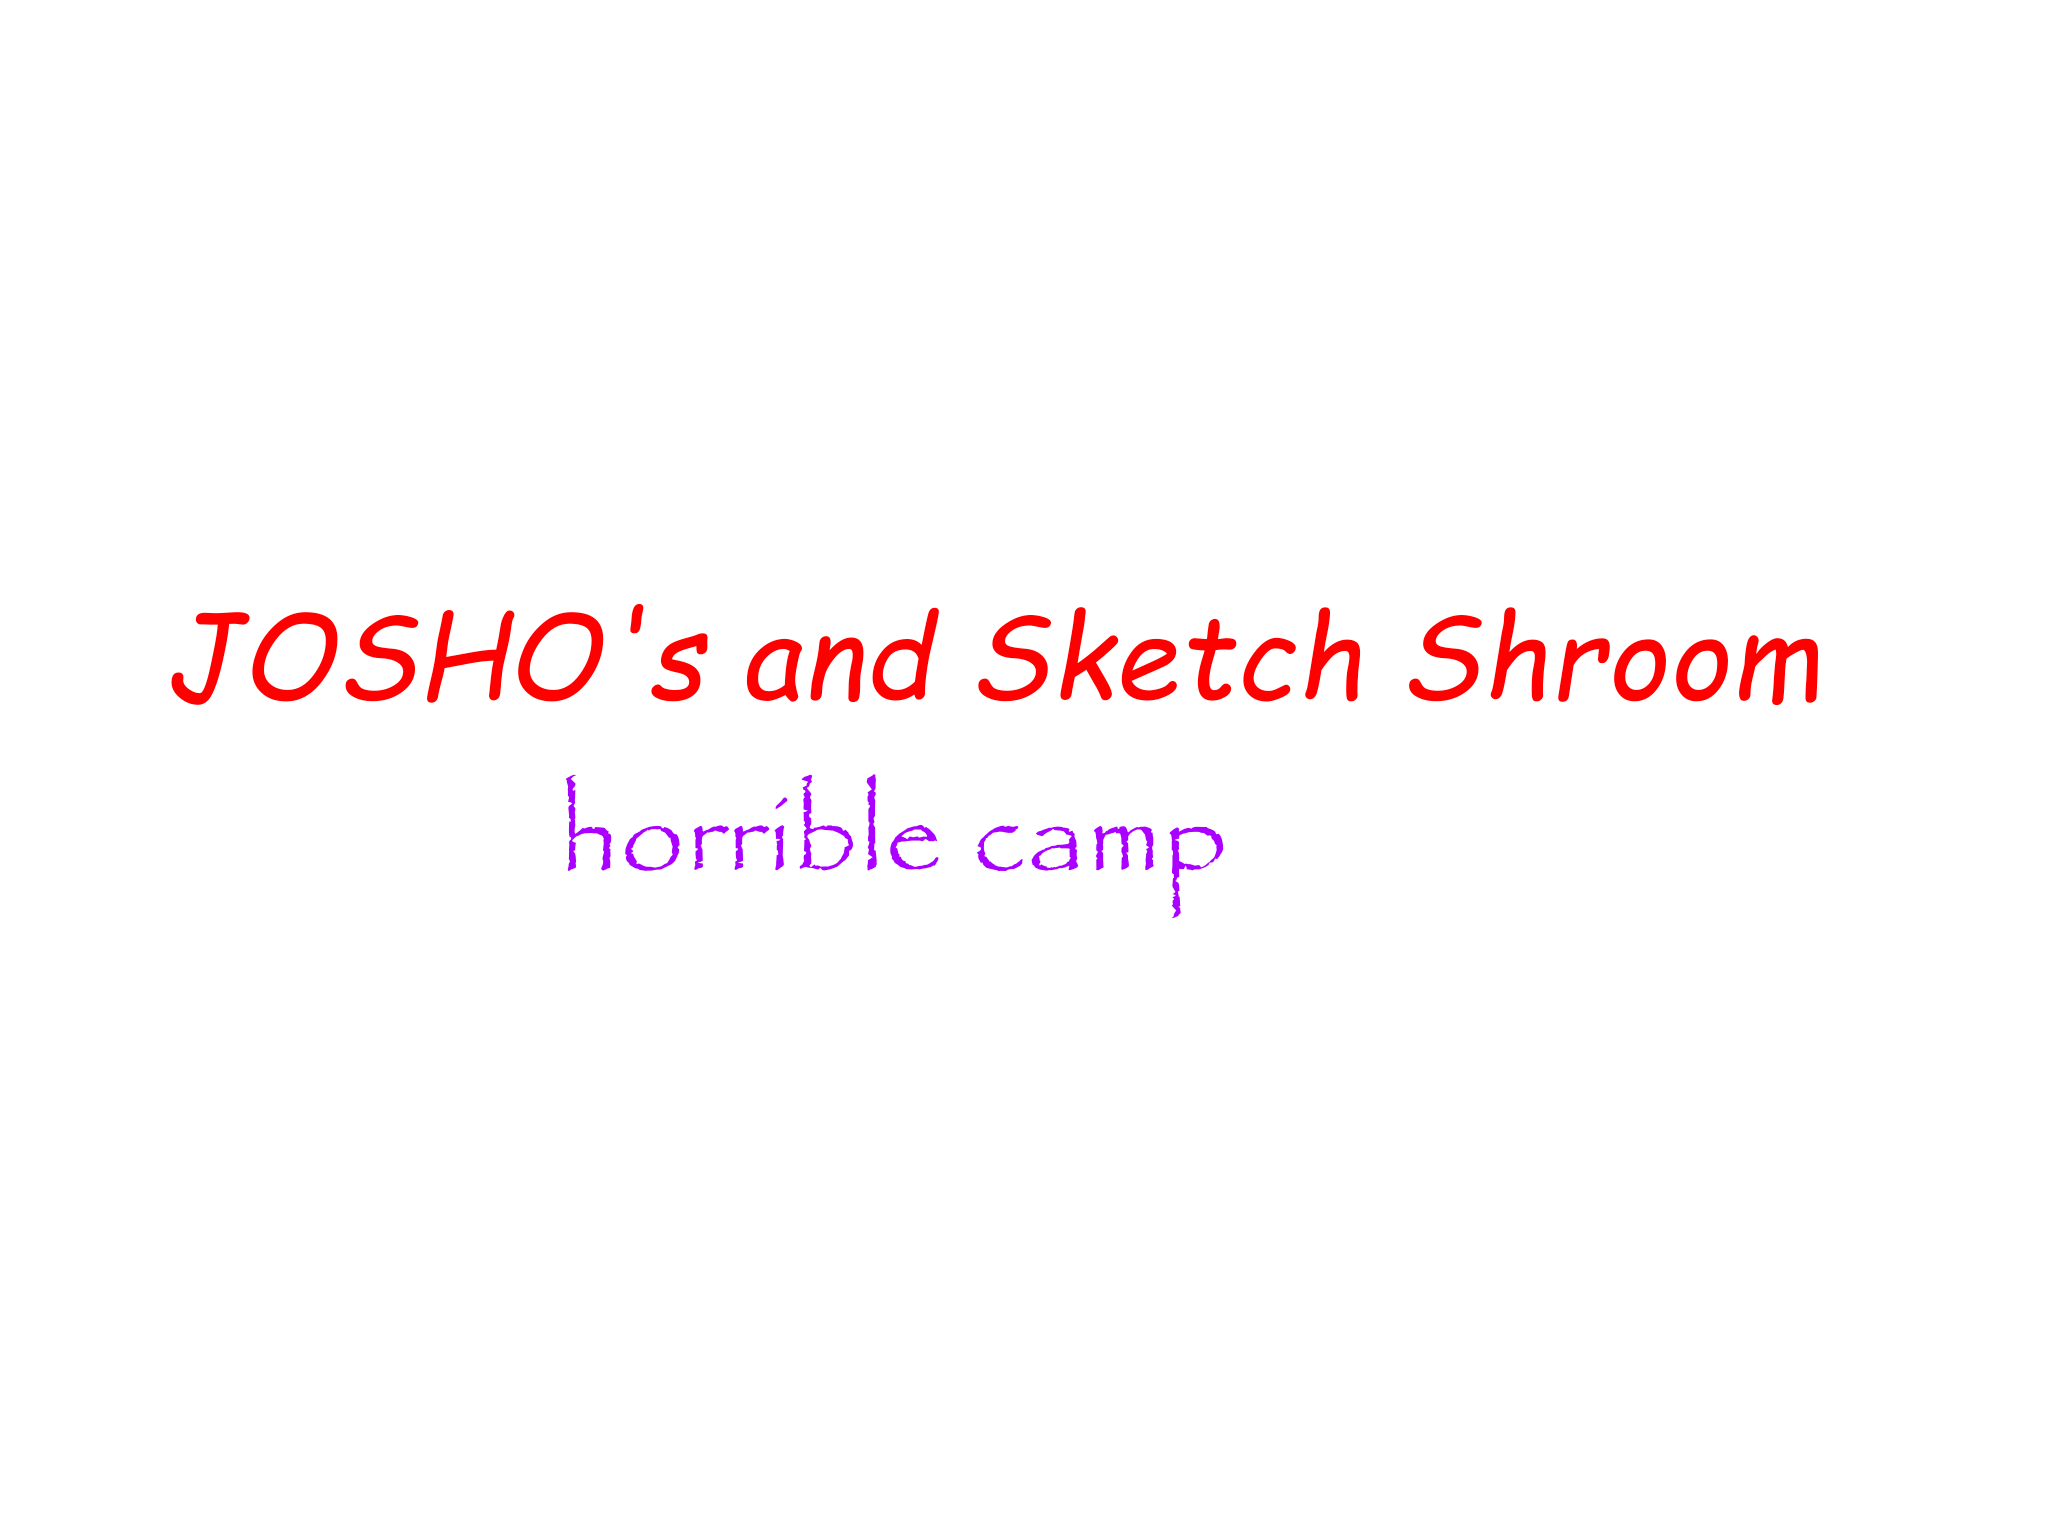 Josho's and Sketch shroom horrible camp